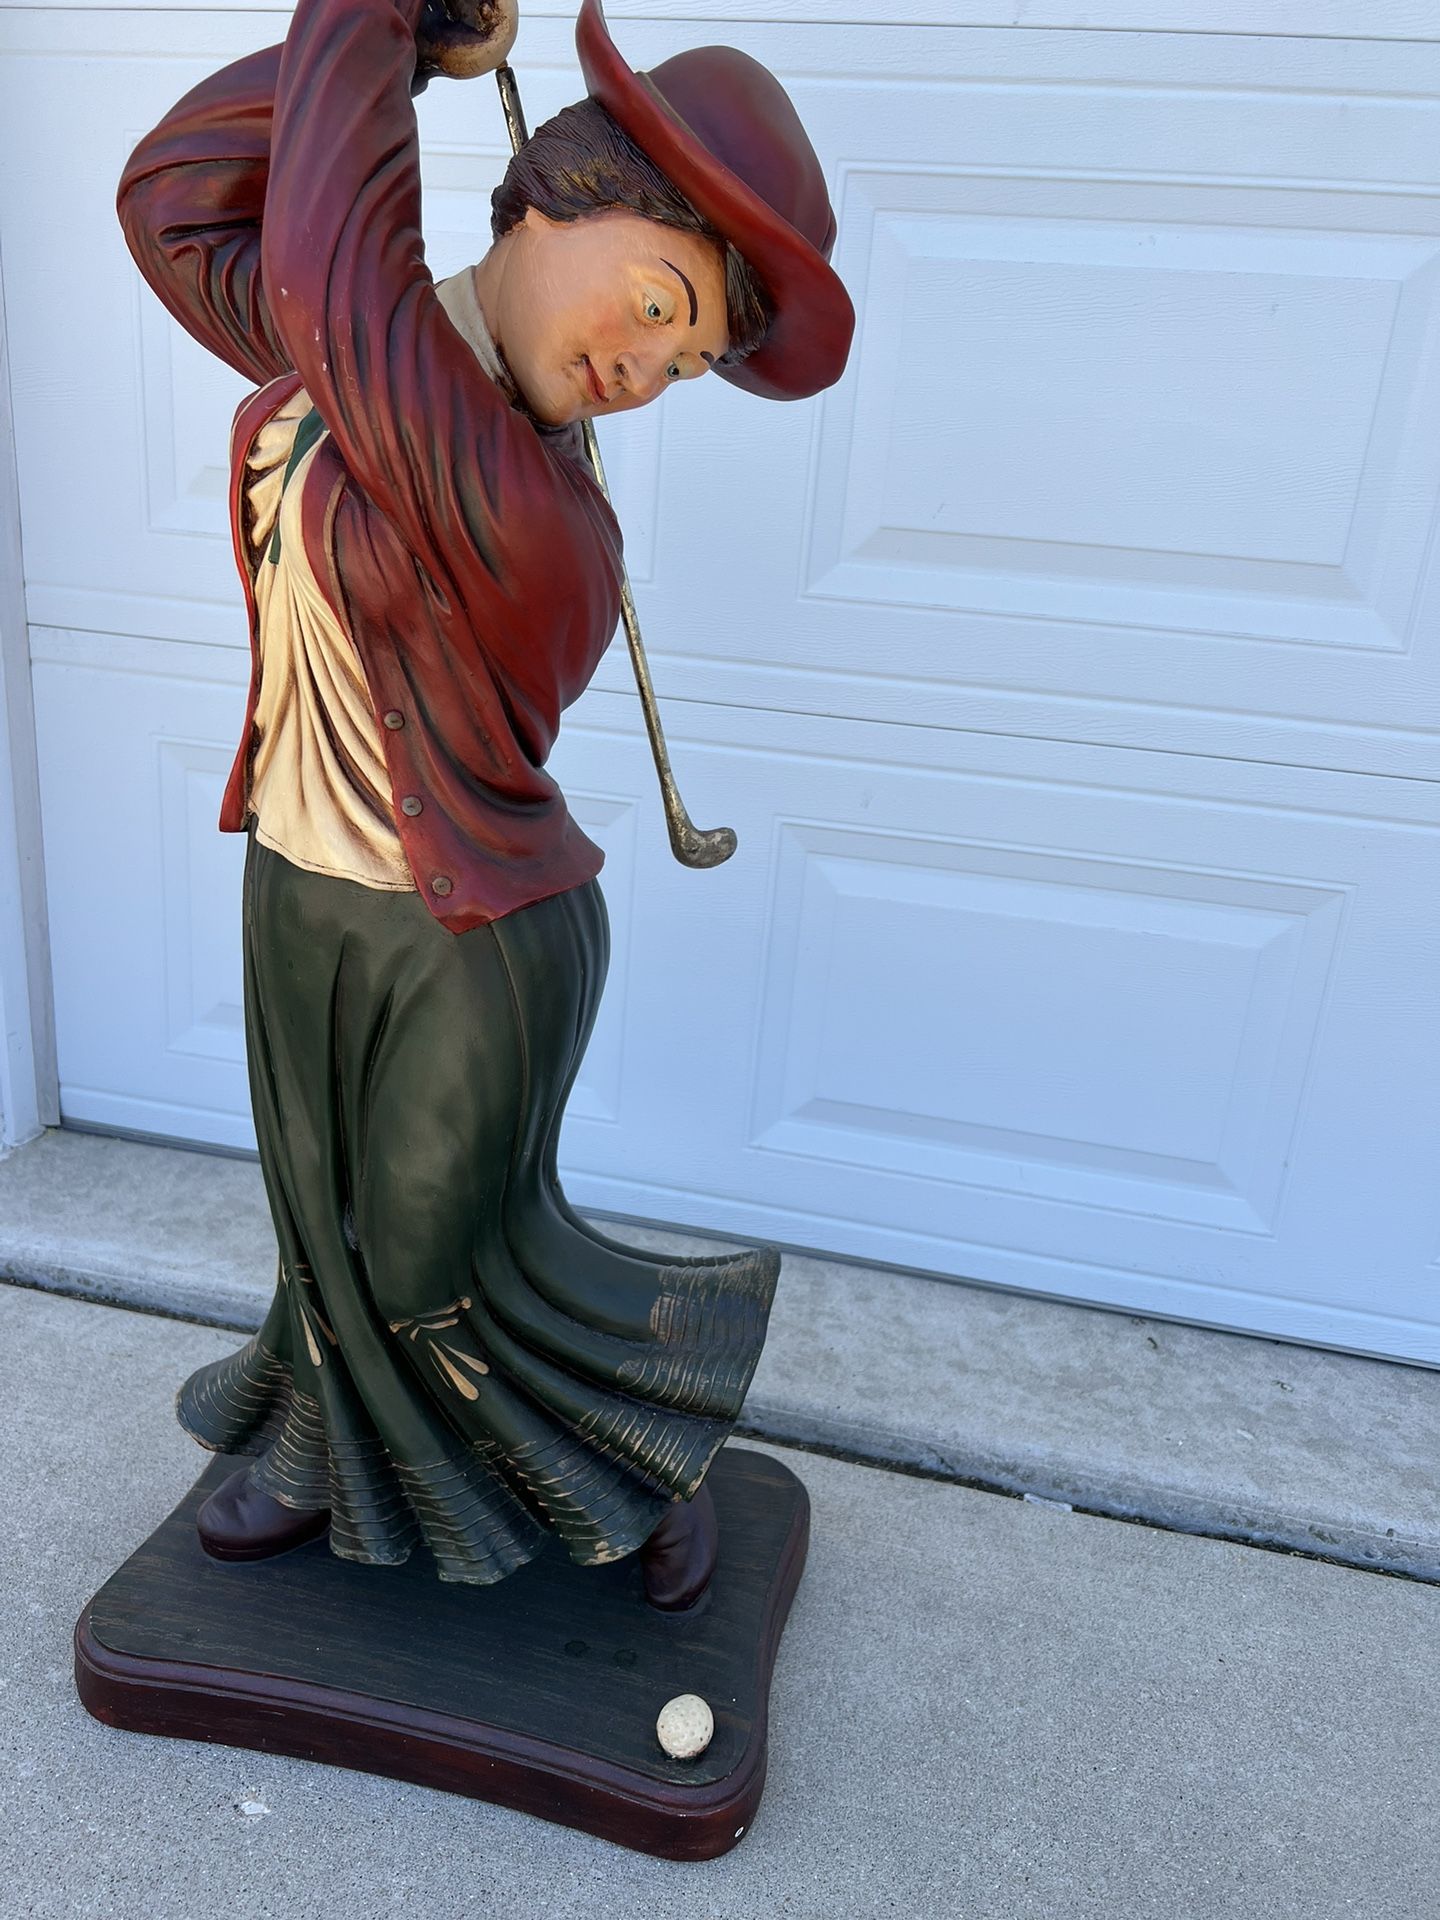 Vintage lady golfer statue